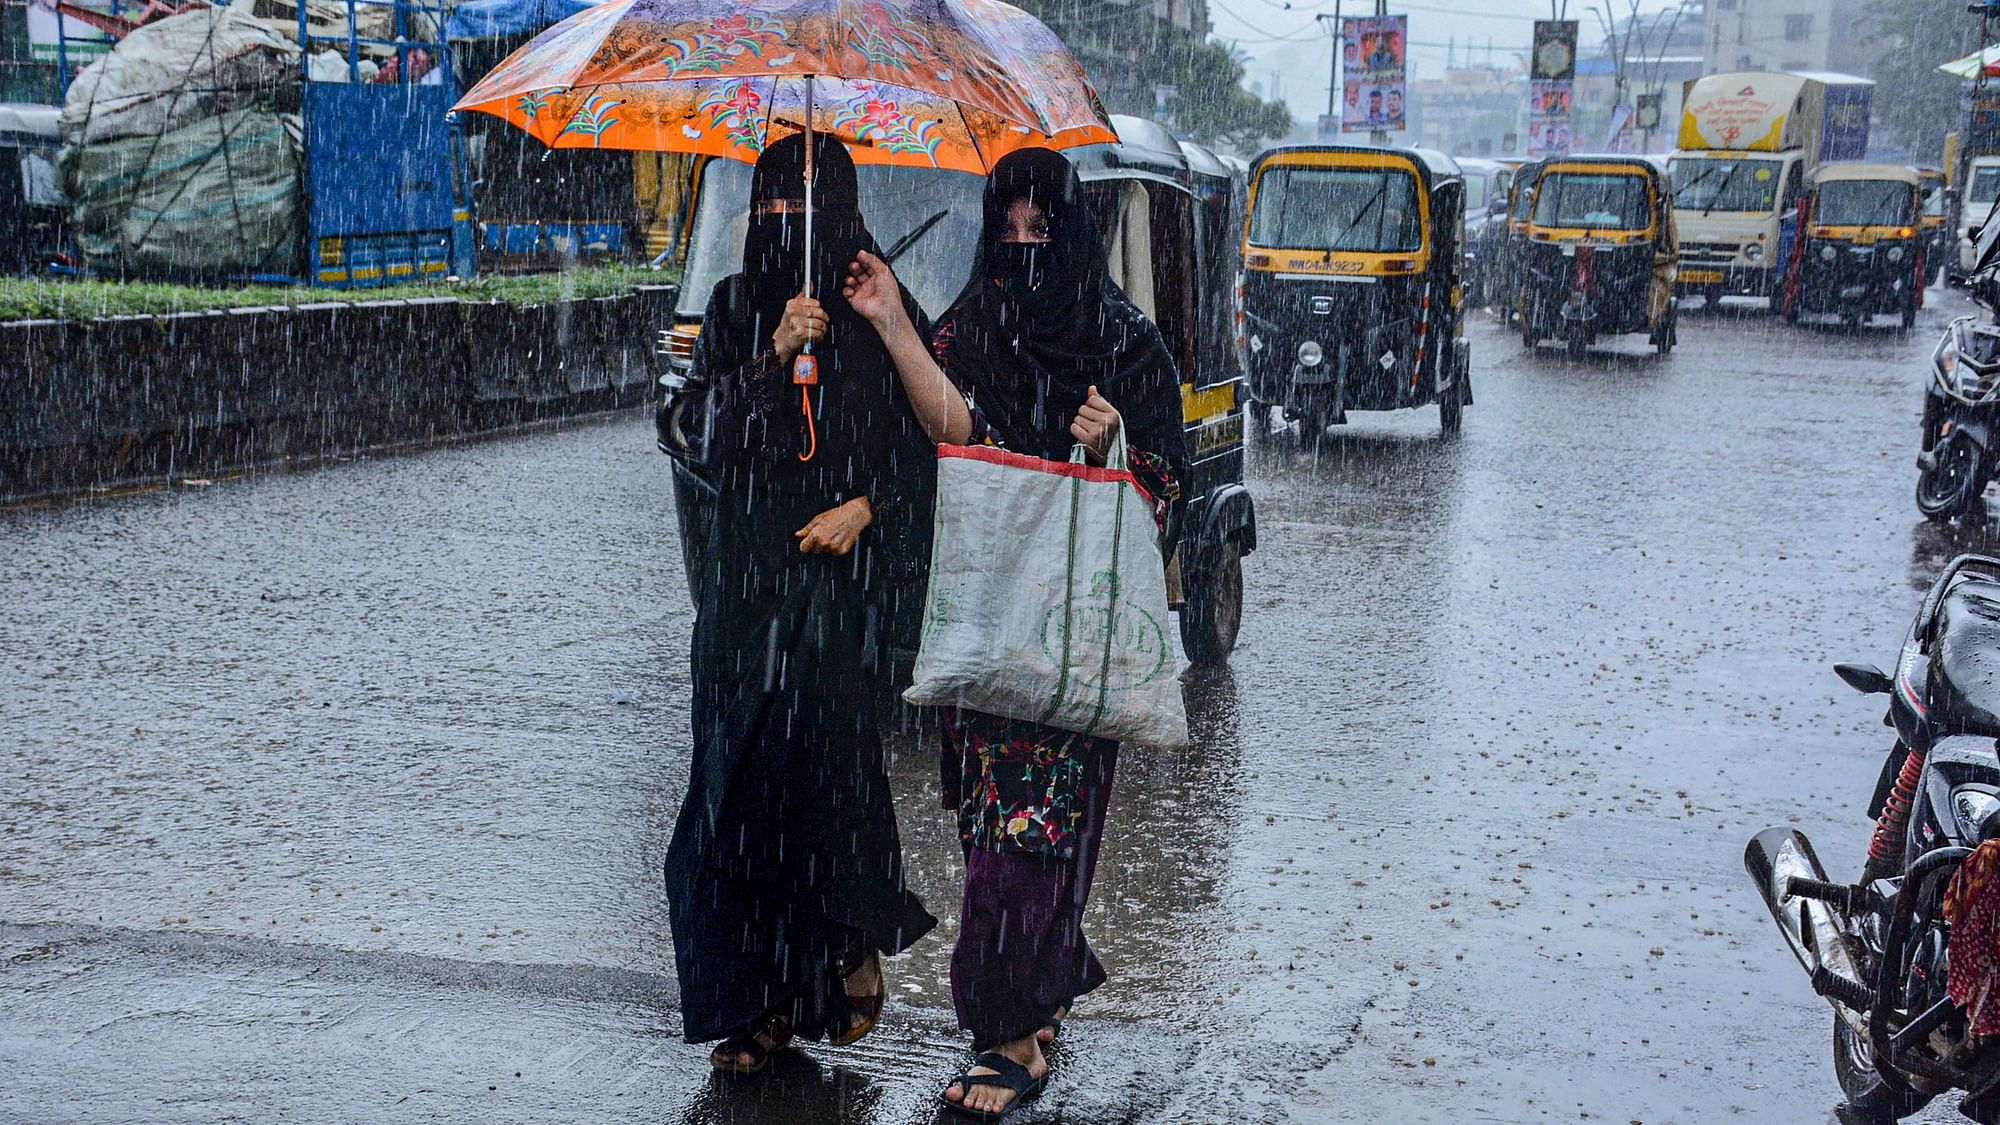 <div class="paragraphs"><p>Thane: Women walk under an umbrella during rains due to cyclone Gulab's influence at Mumbra in Thane on Tuesday.</p></div>